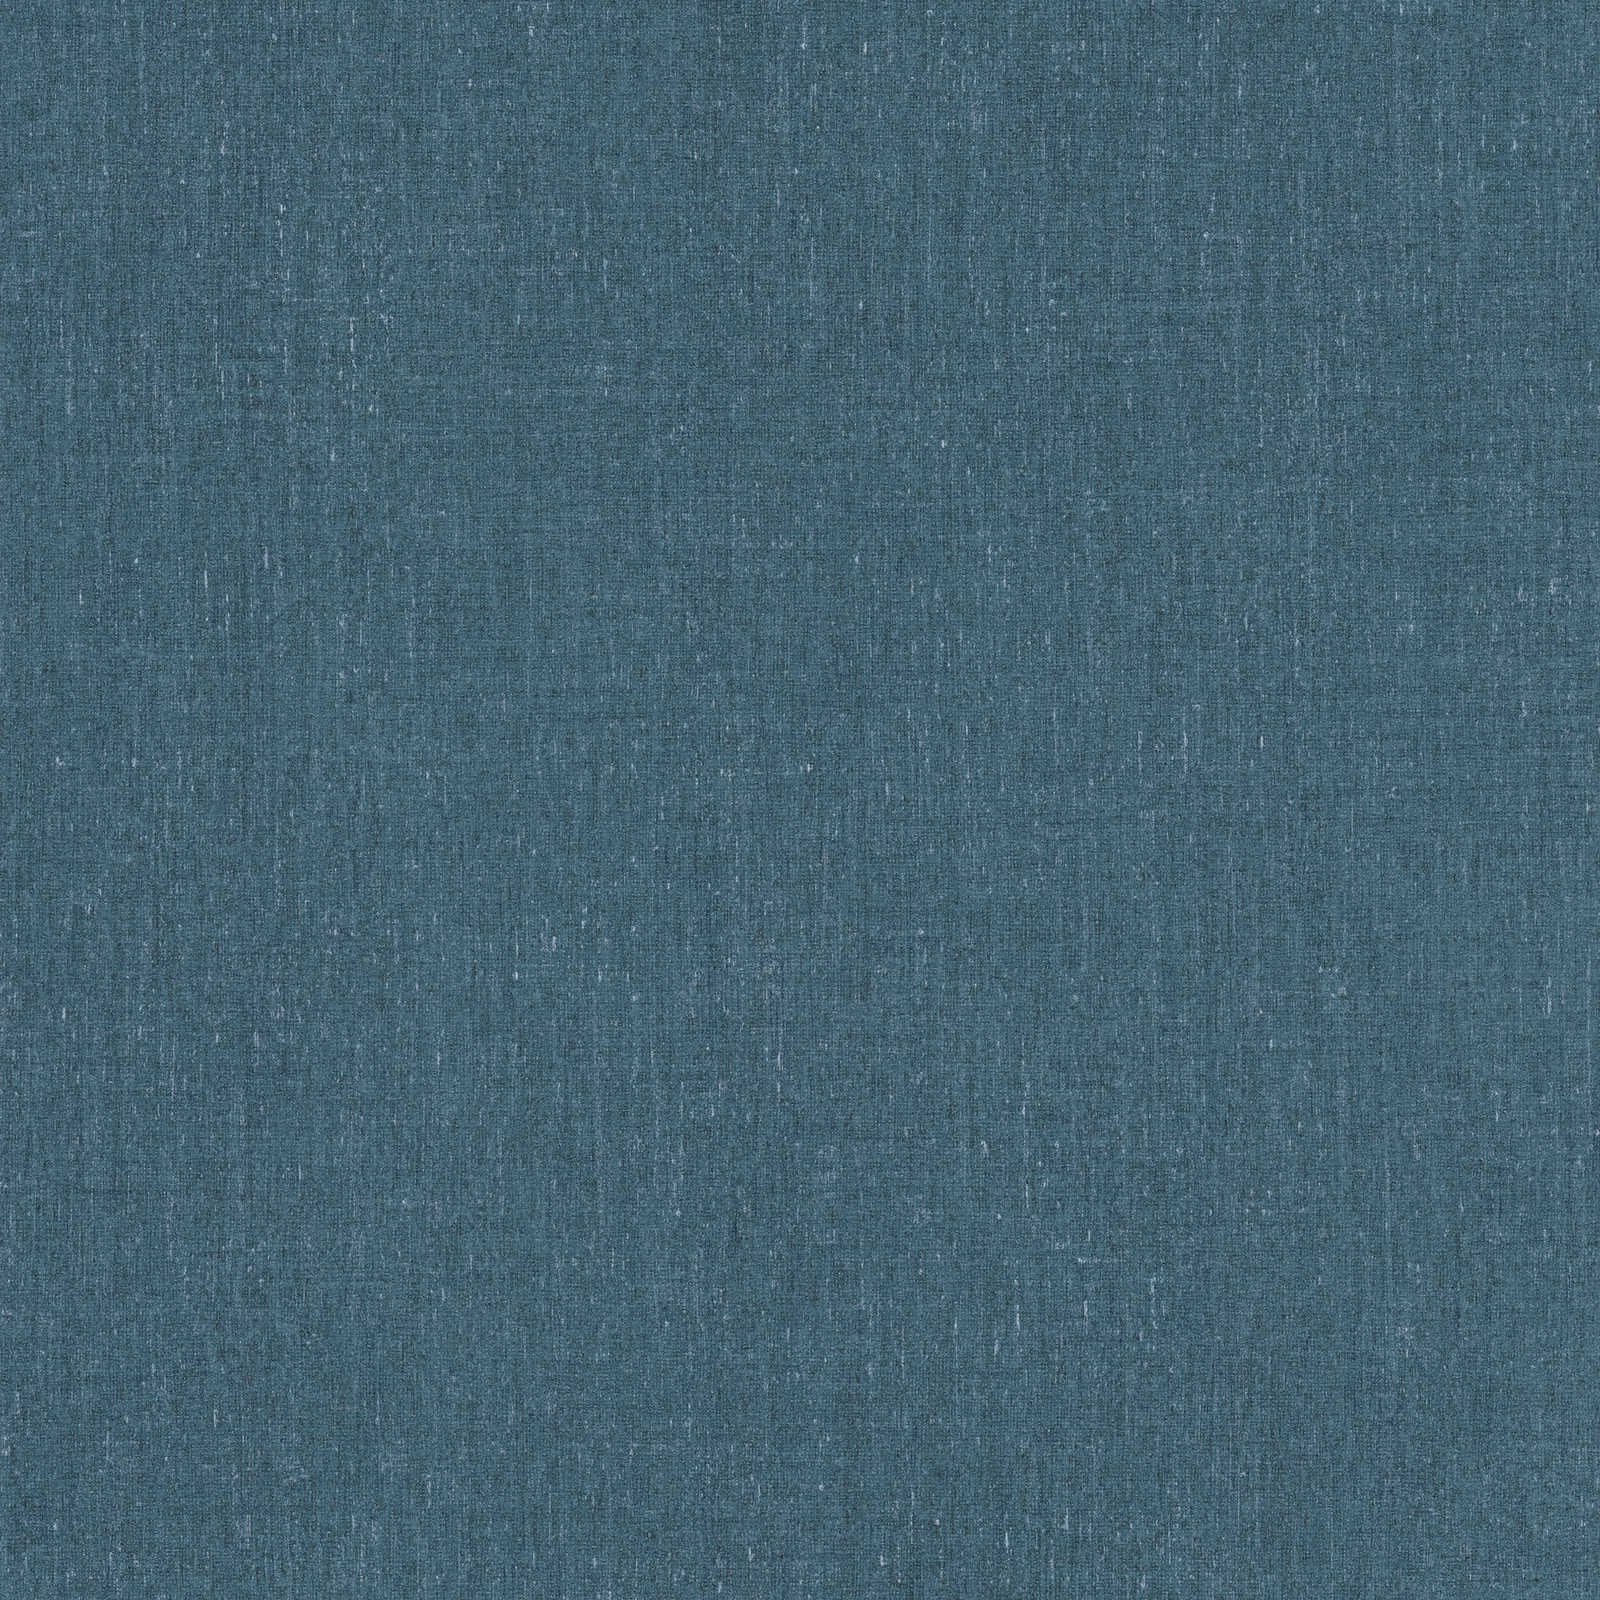 Petrol wallpaper plain with texture detail - Blue
